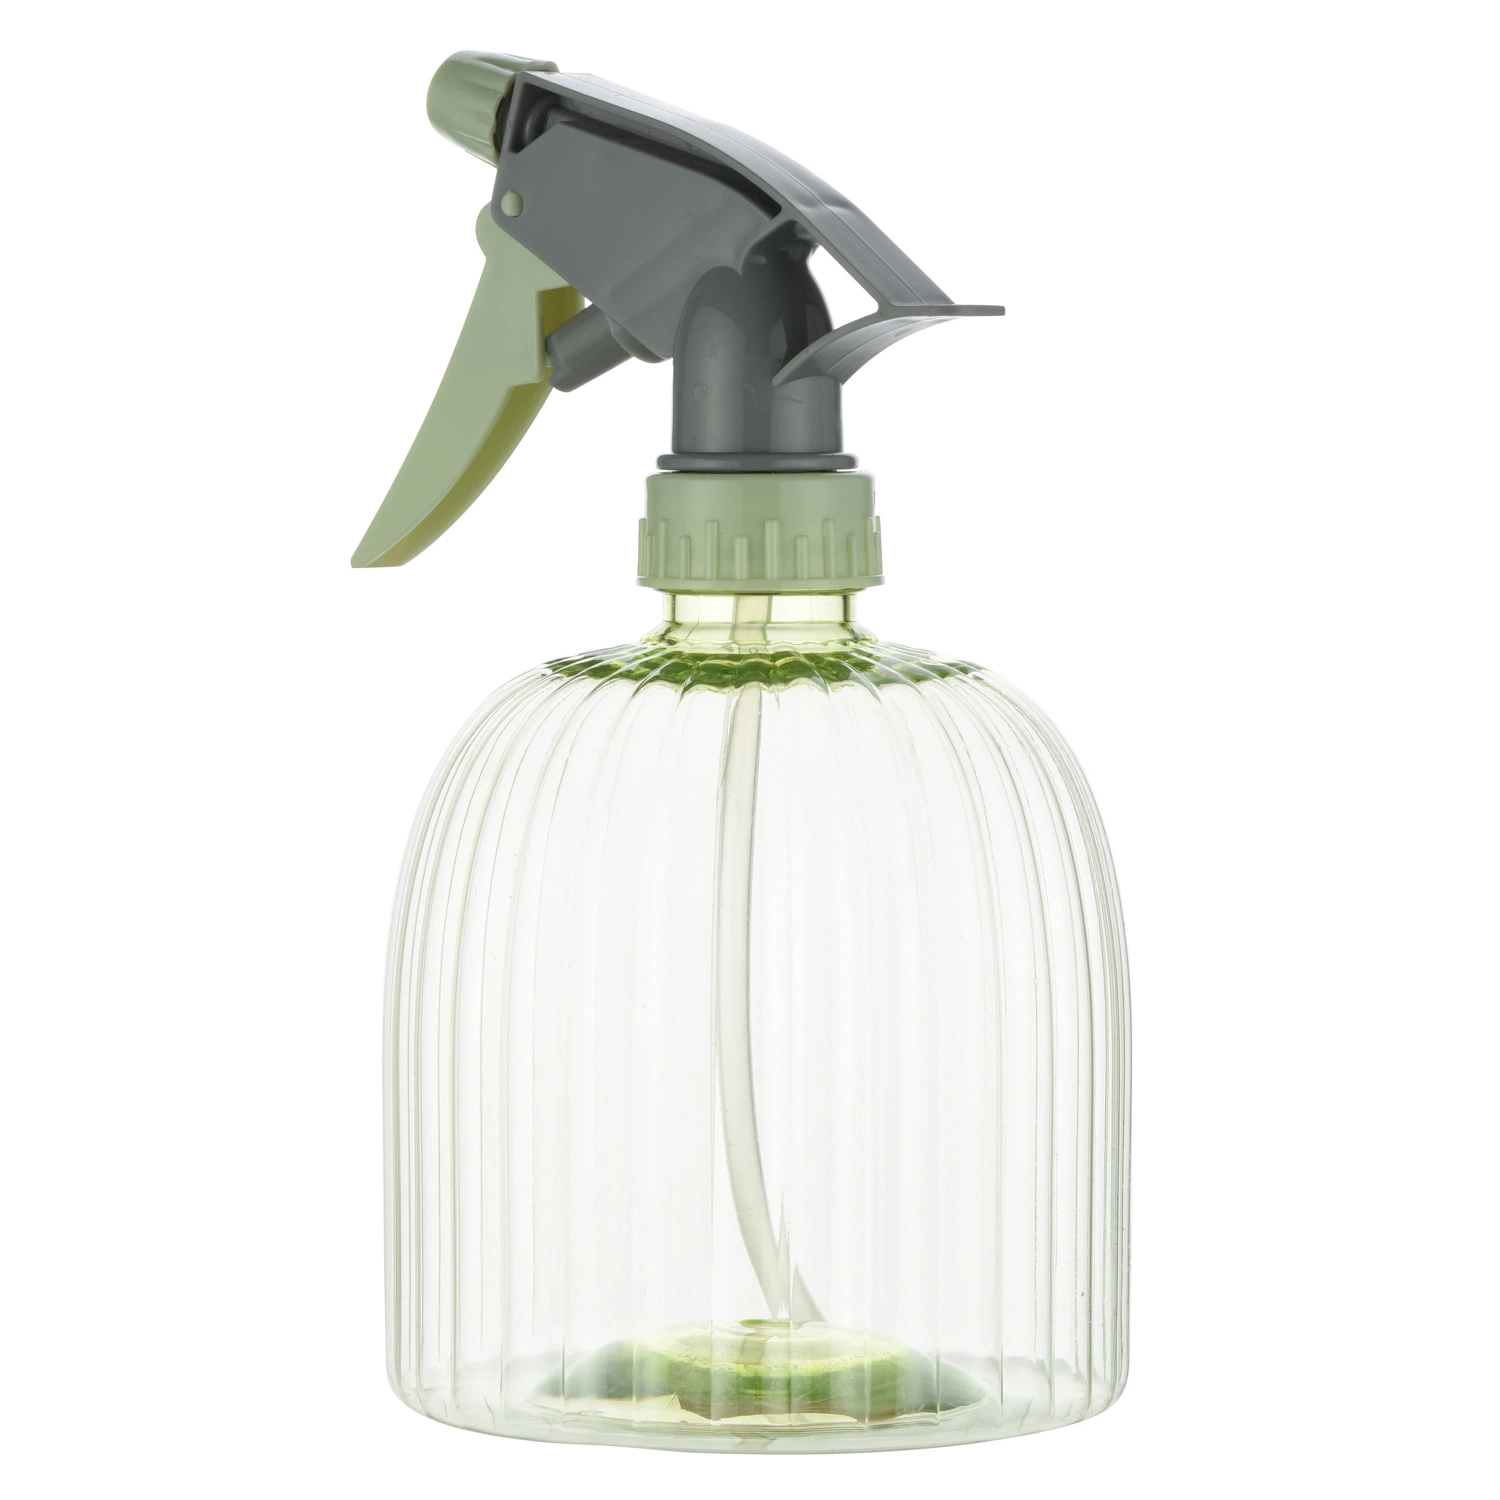 16oz Trigger Sprayer Bottles for Household Cleaning and Gardening